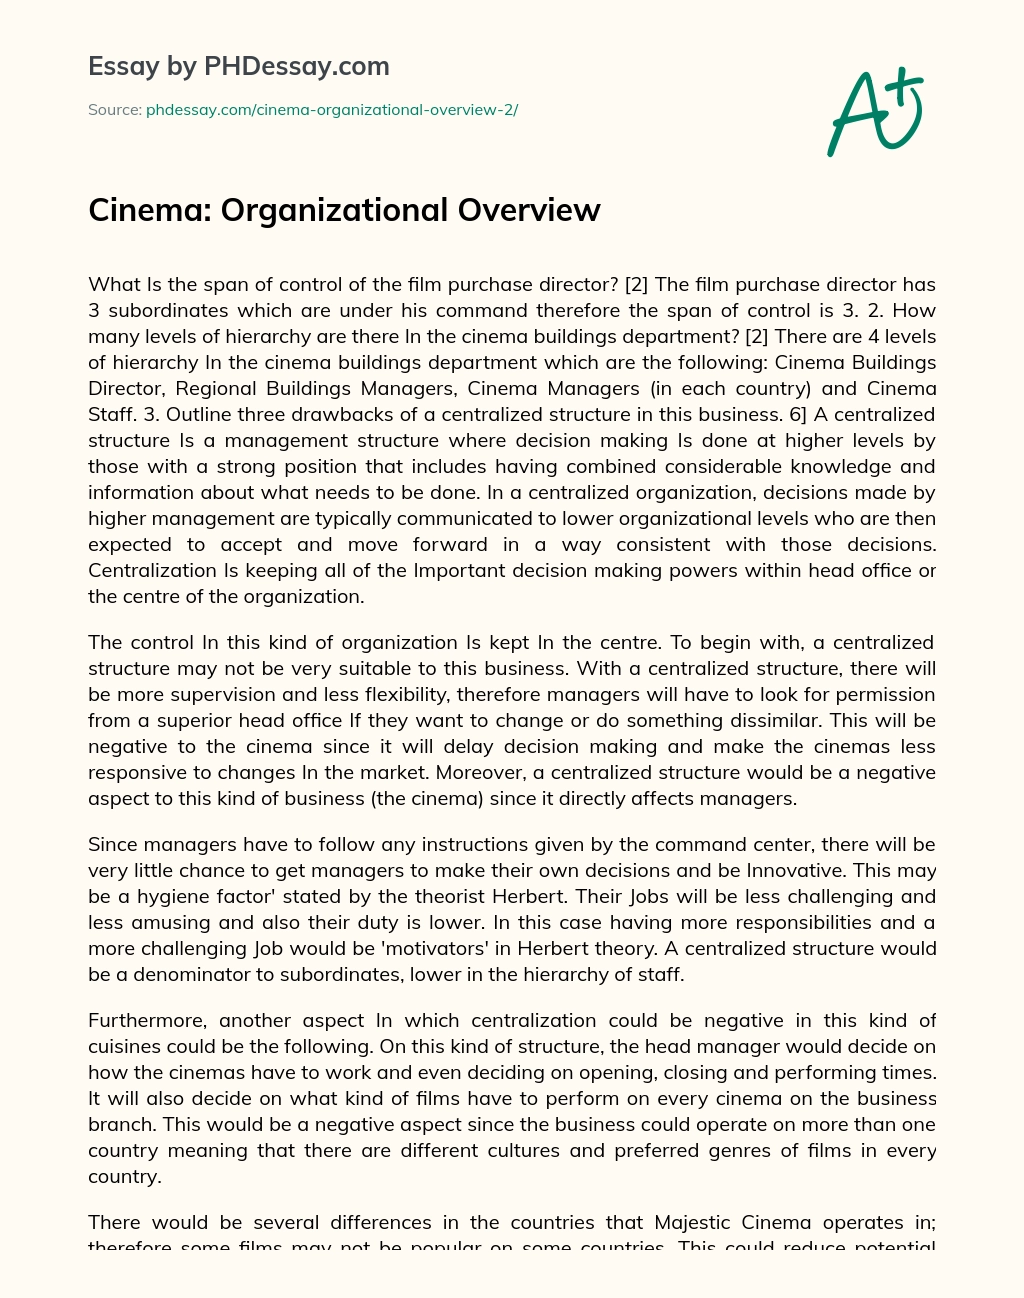 Cinema: Organizational Overview essay